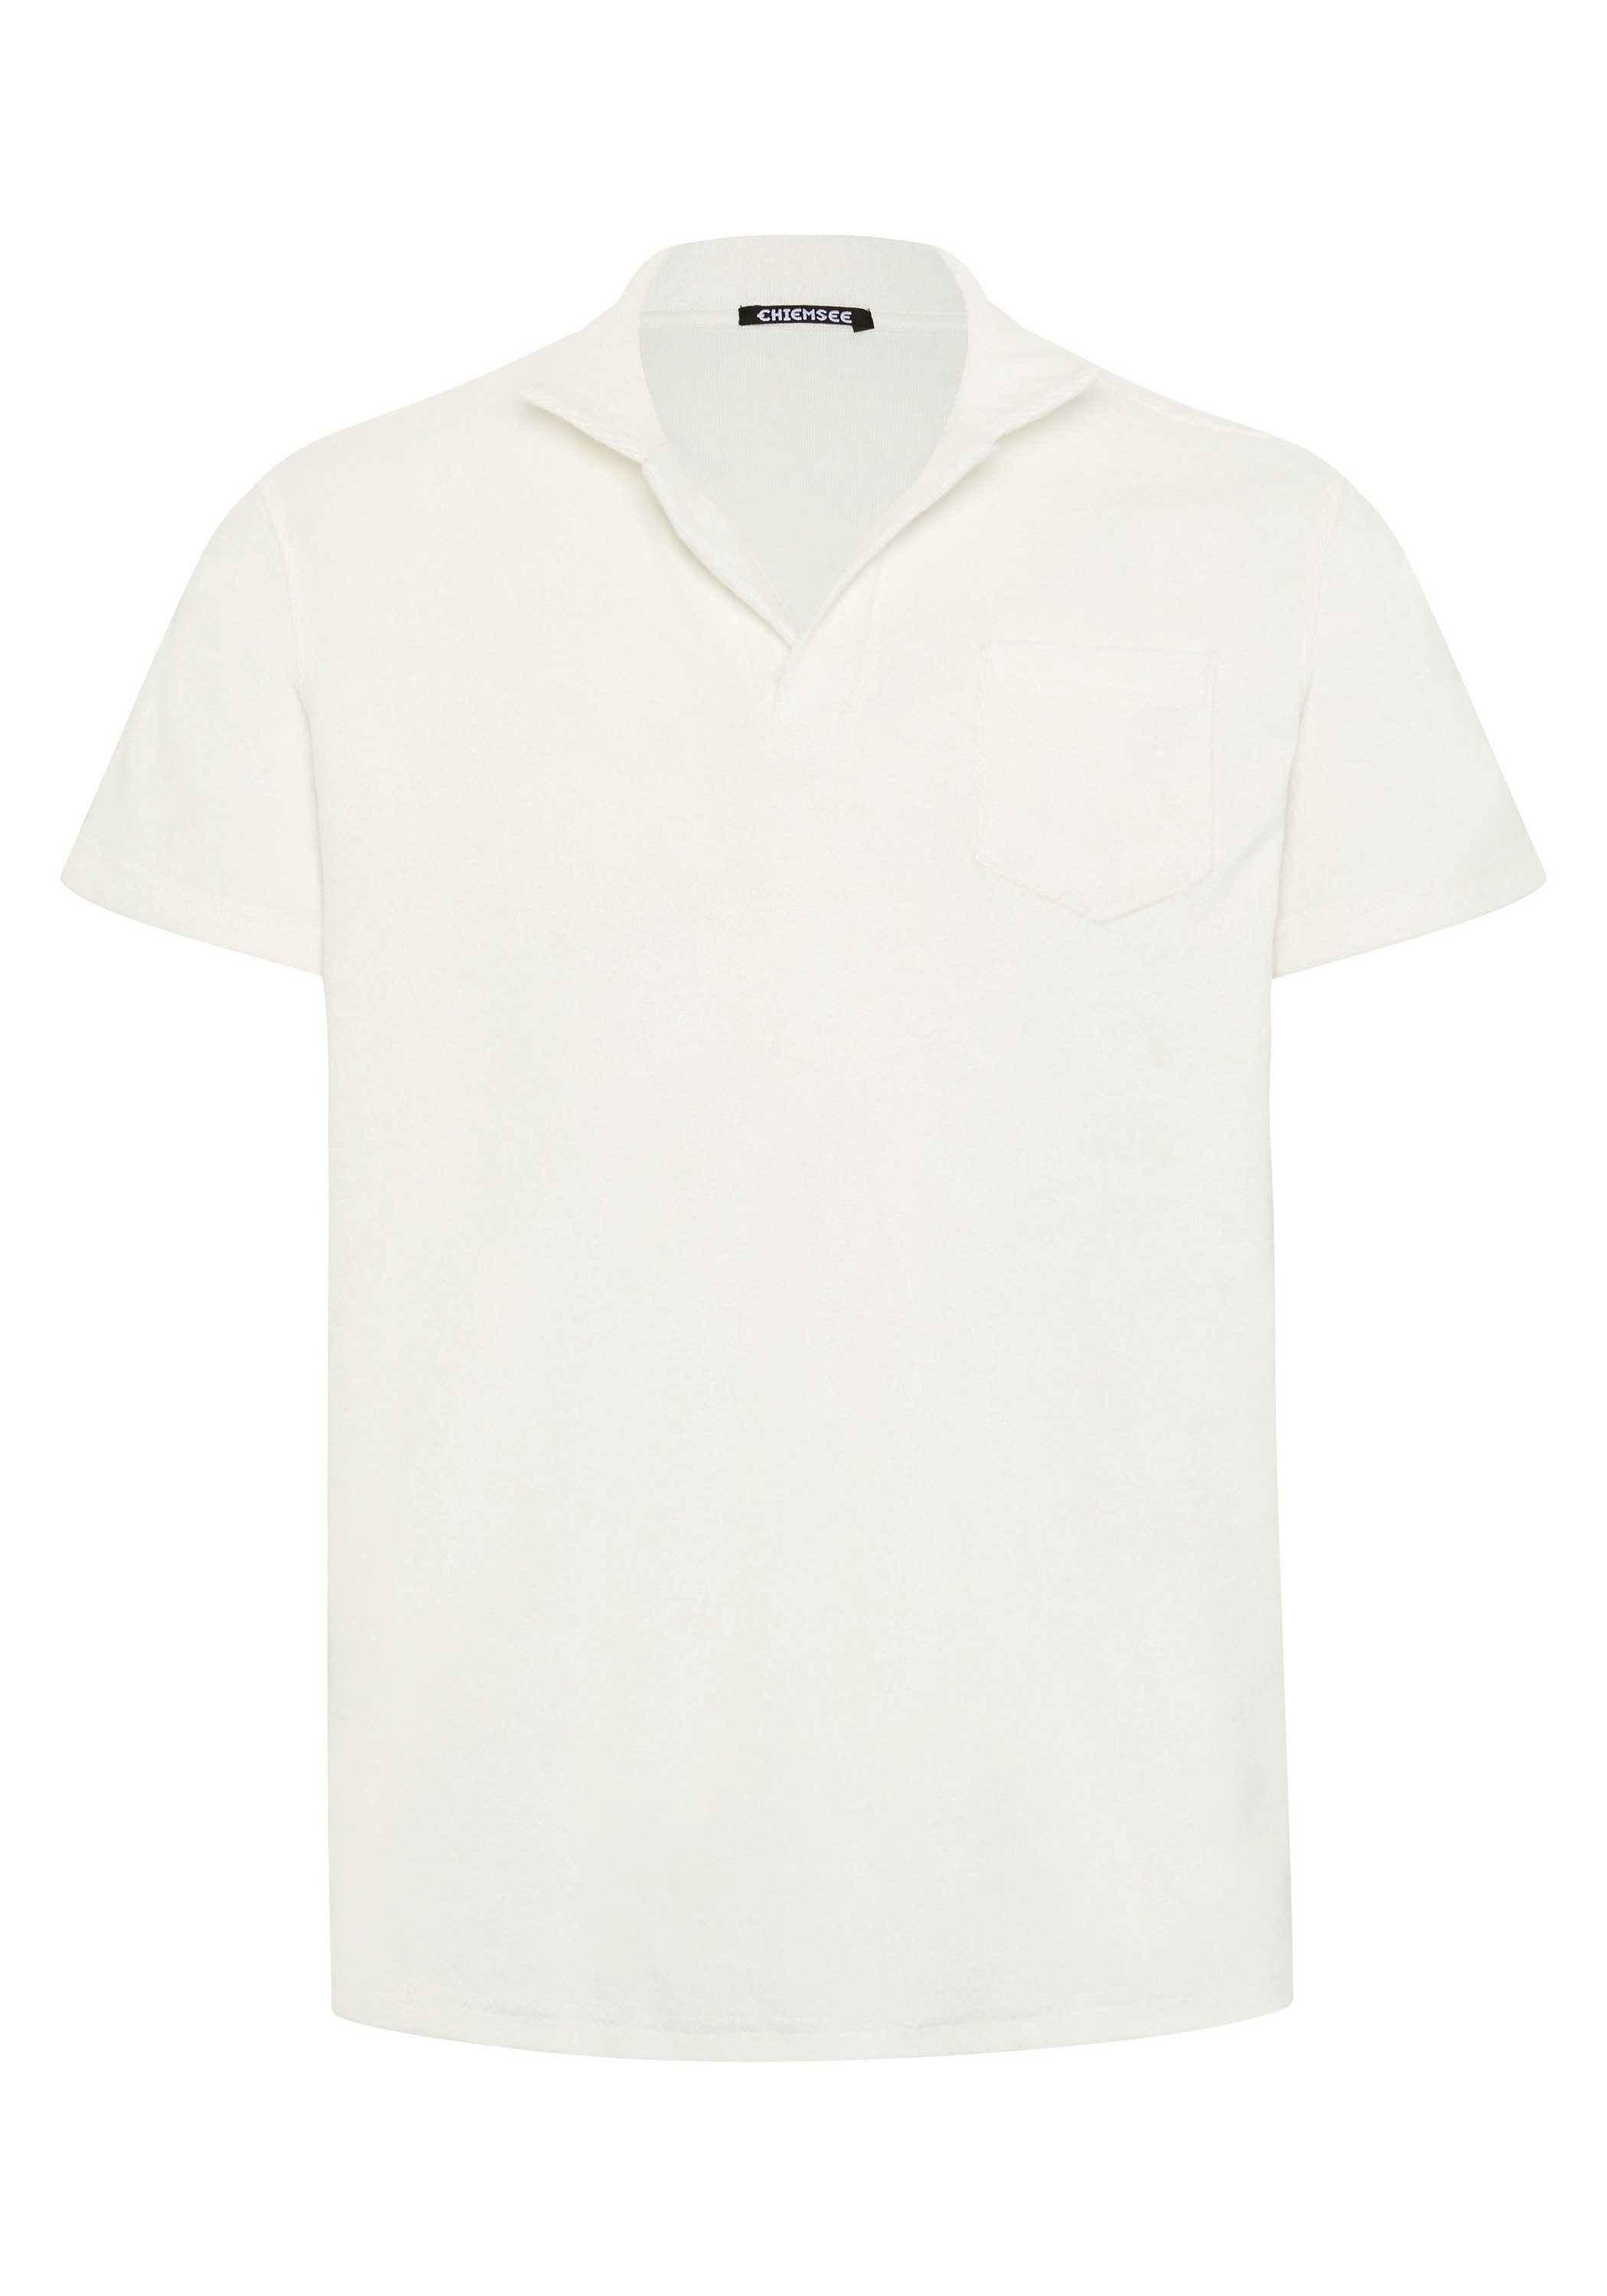 Star Chiemsee Frottee-Look Poloshirt 1 Poloshirt White modernen im 11-4202